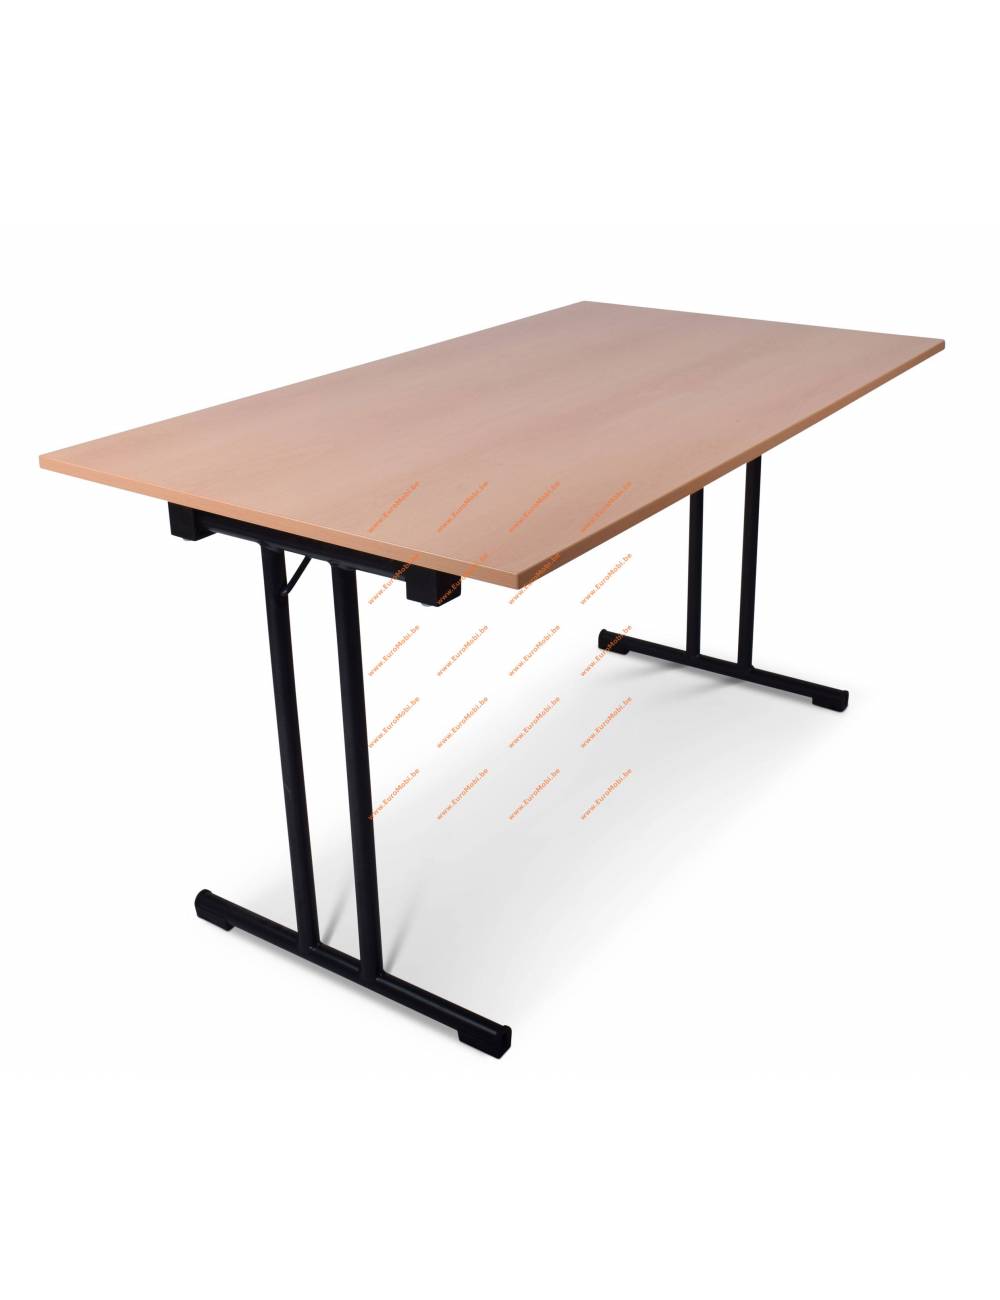 Table pliante Conférence - 140 x 80 cm - Melamine